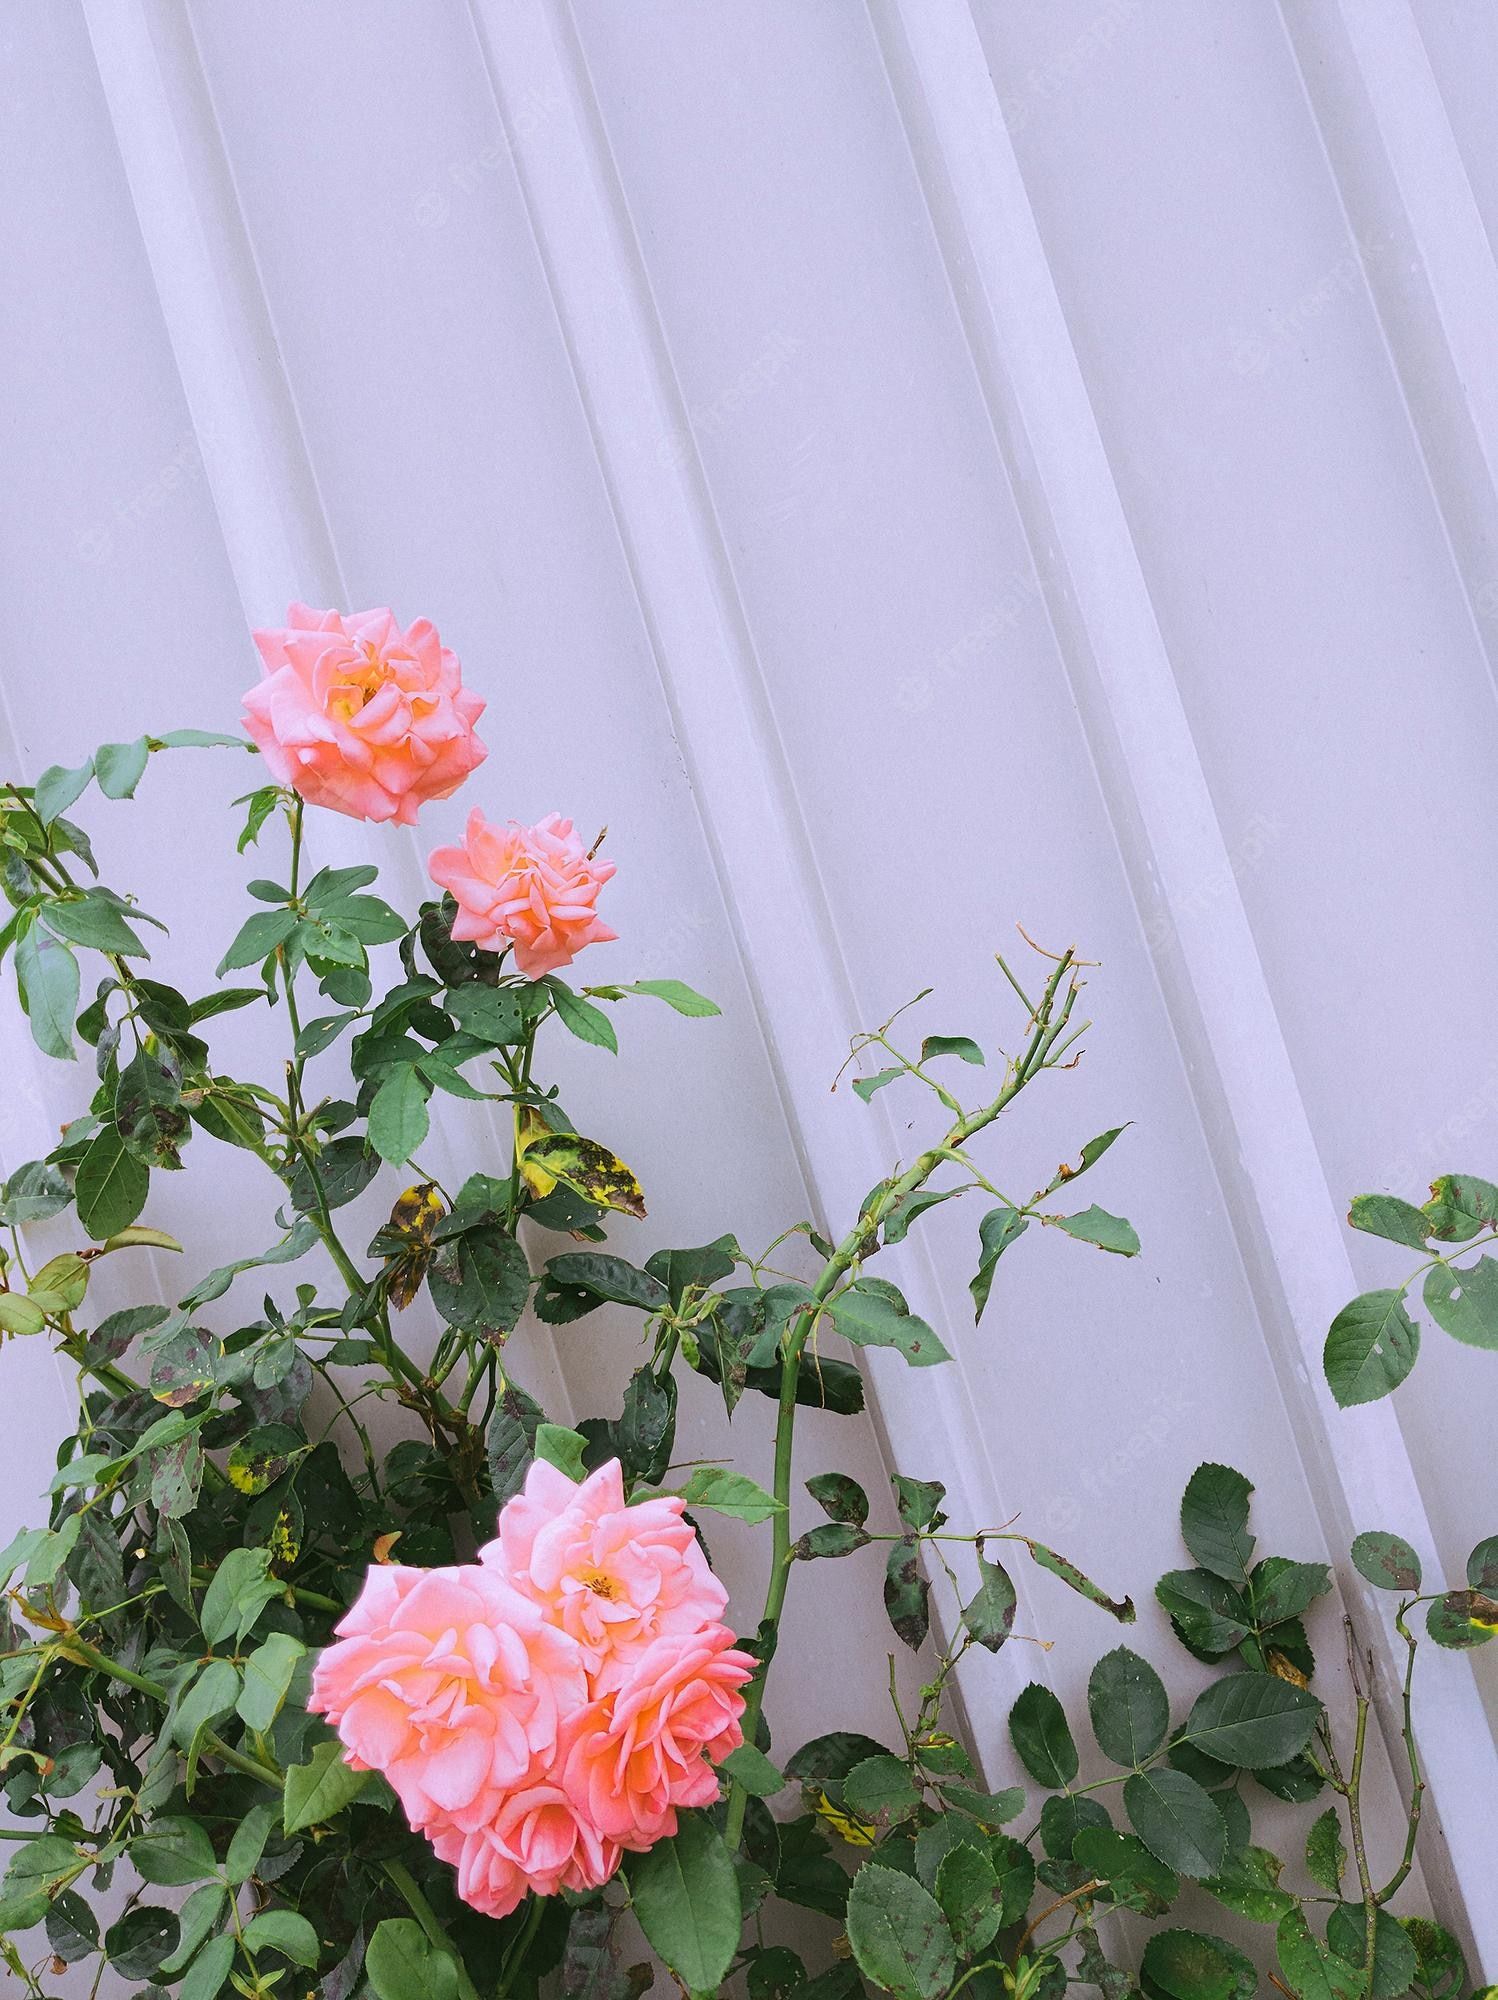 Pink roses on a white fence - Roses, flower, garden